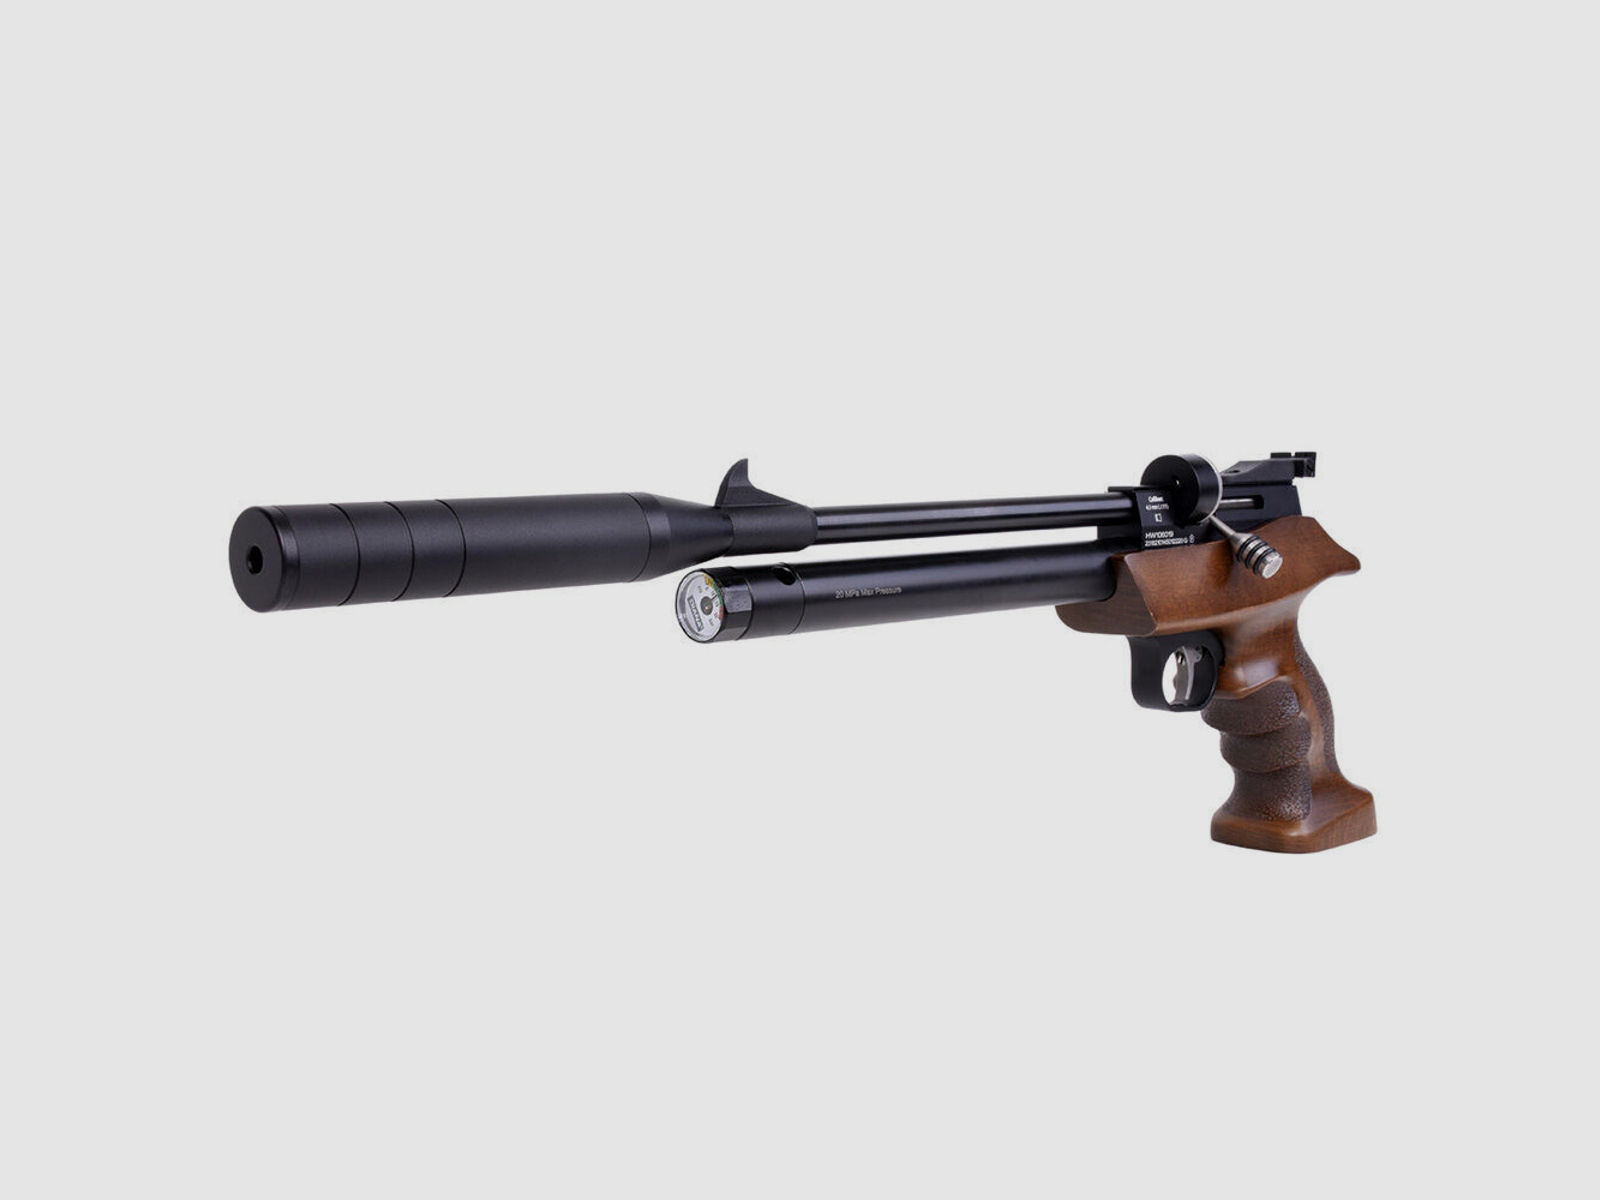 Diana Bandit Gen 2 Pressluftpistole 4,5mm Diabolos Plinking-Set